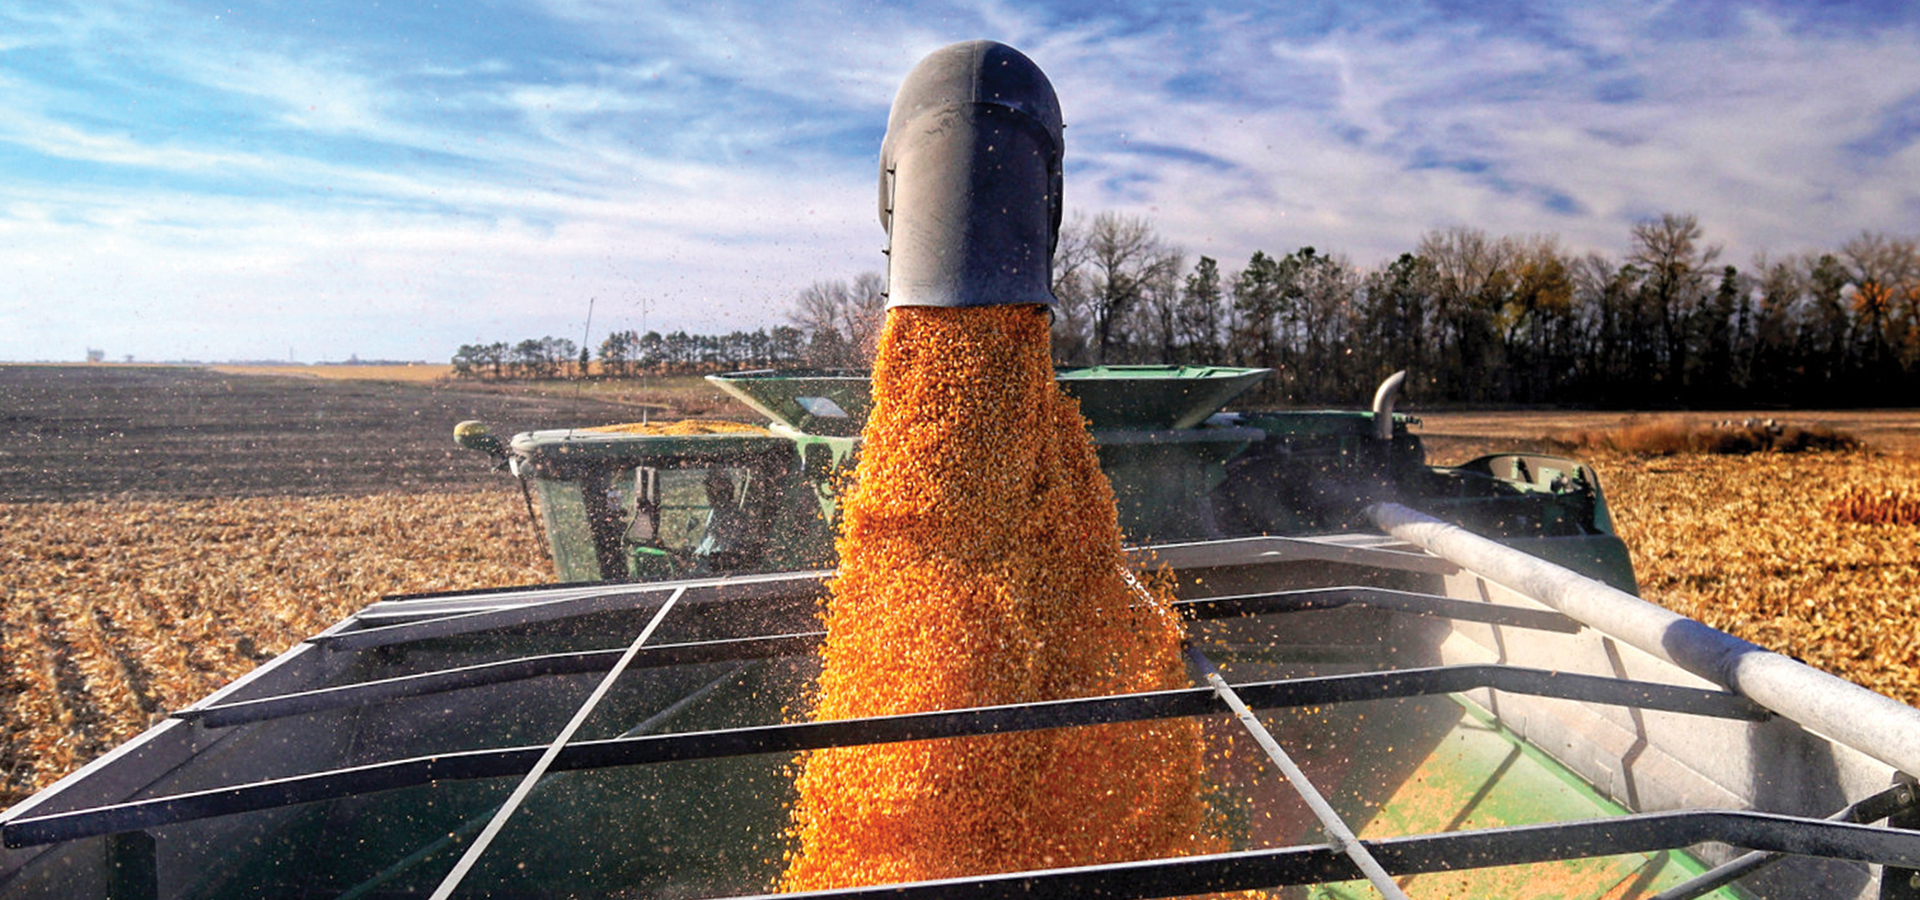 A combine unloading corn into a grain cart